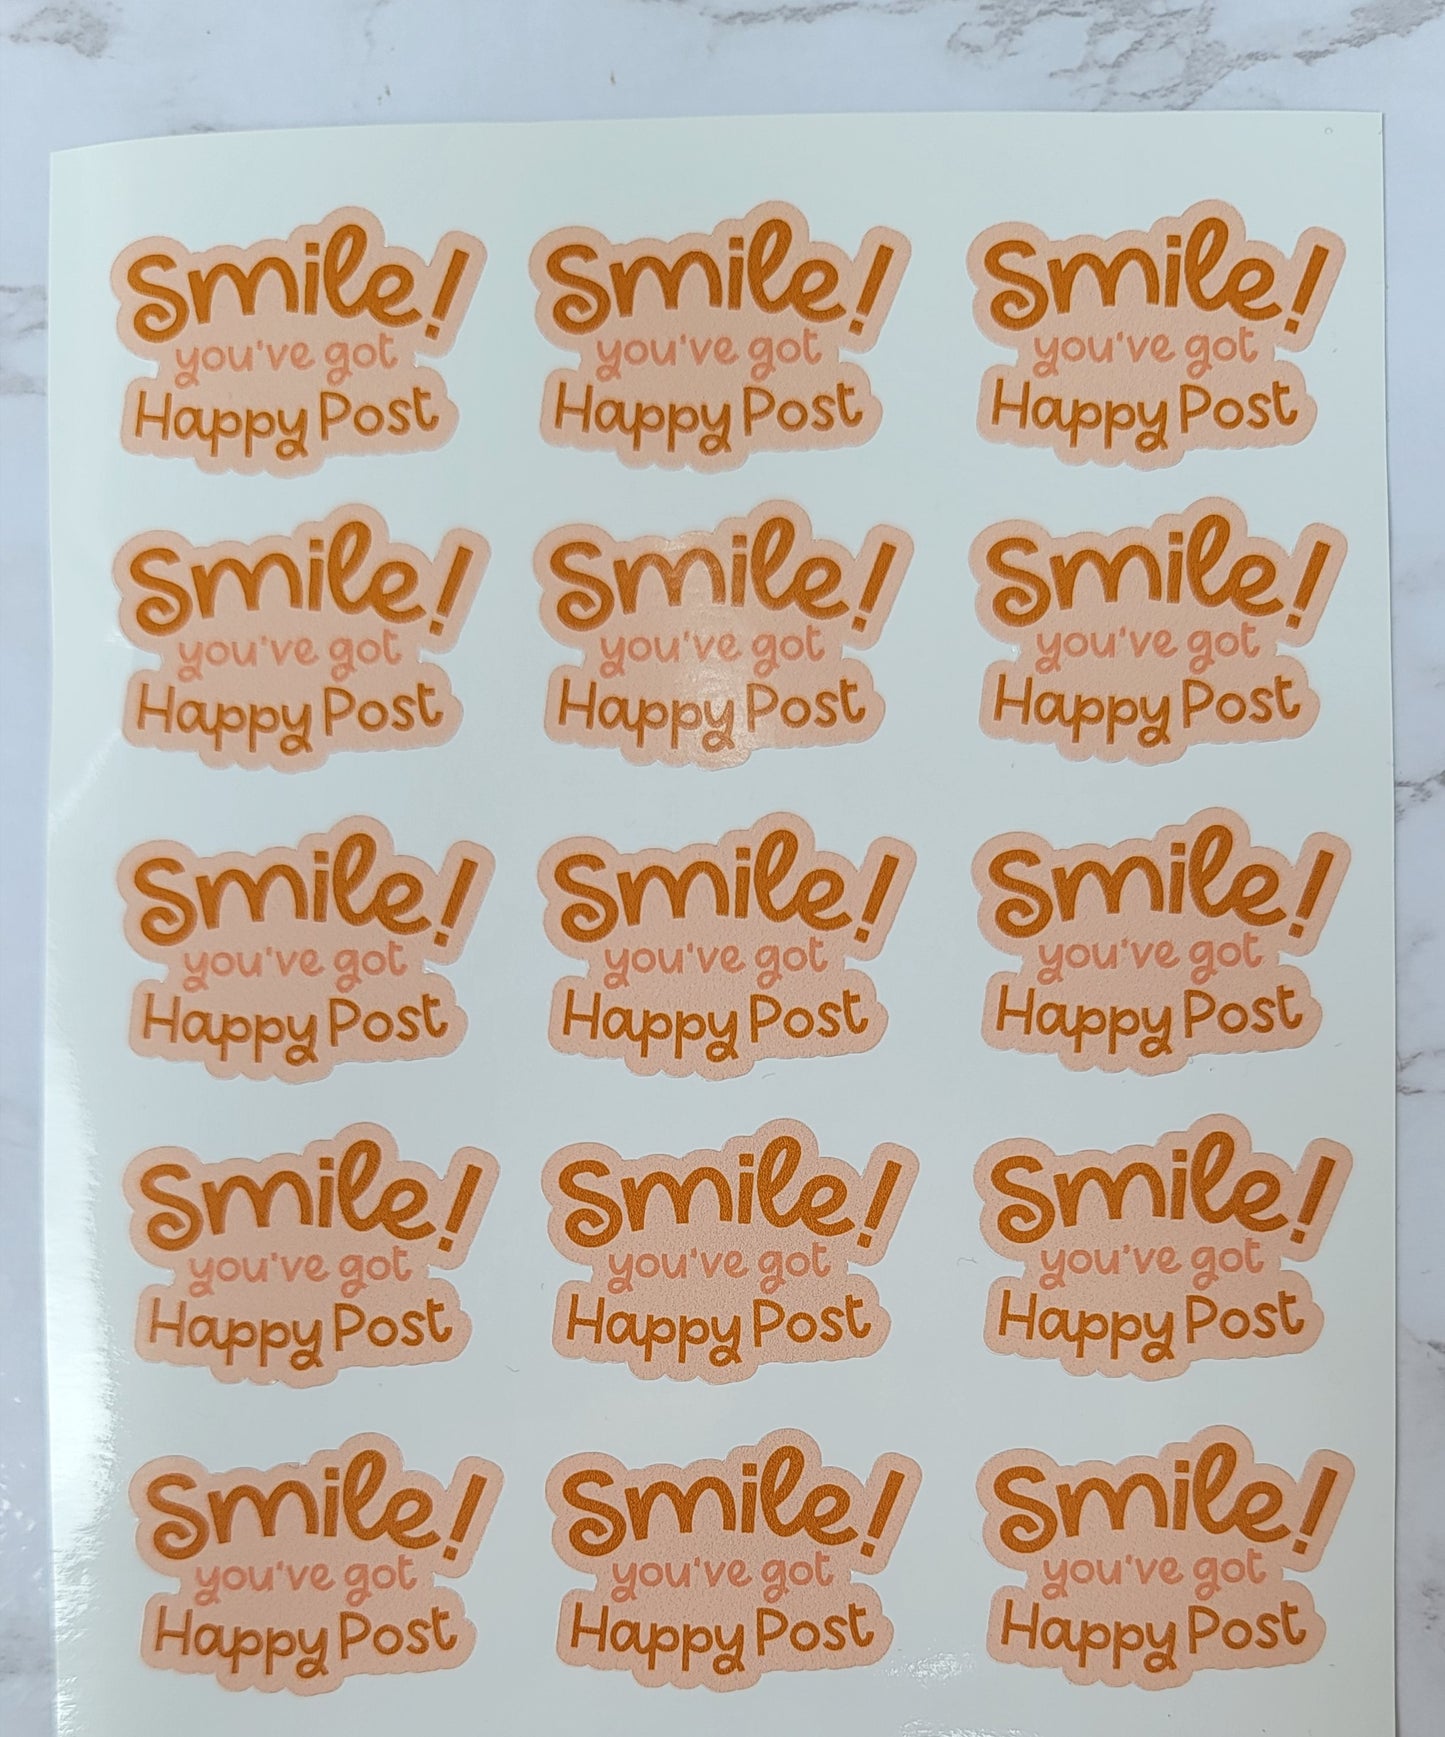 "Smile! You've Got Happy Post" - Slight Cursive - Dark Orange w/ Light Salmon Orange Background - Waterproof Sticker Sheet